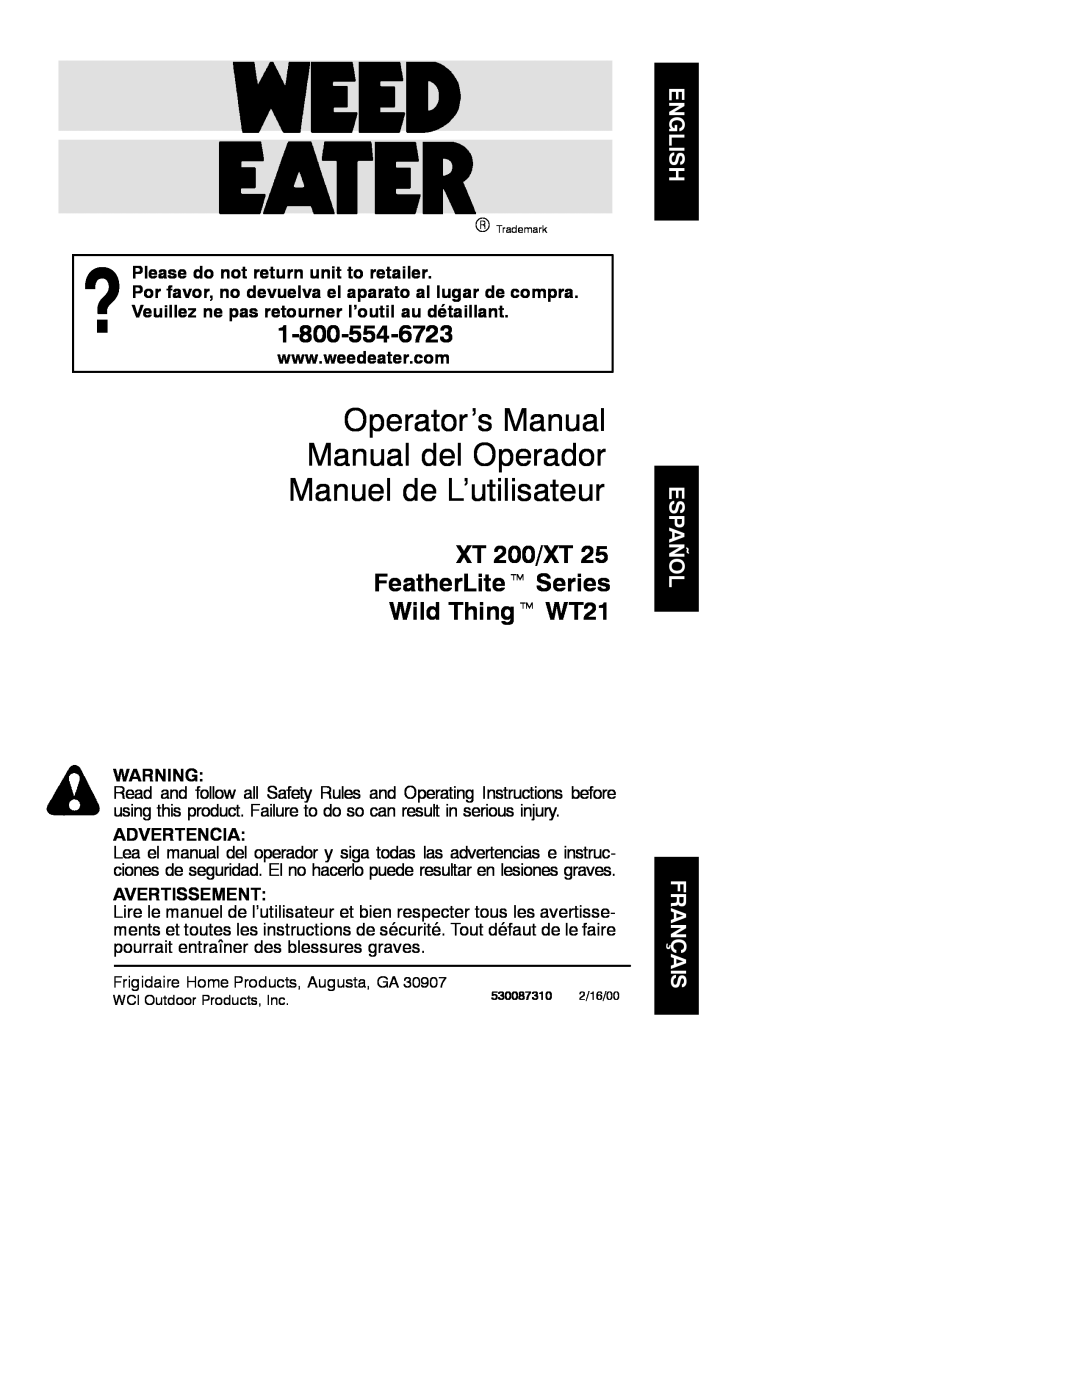 Weed Eater 530087310 manual Please do not return unit to retailer, Advertencia, Avertissement, Manuel de L’utilisateur 